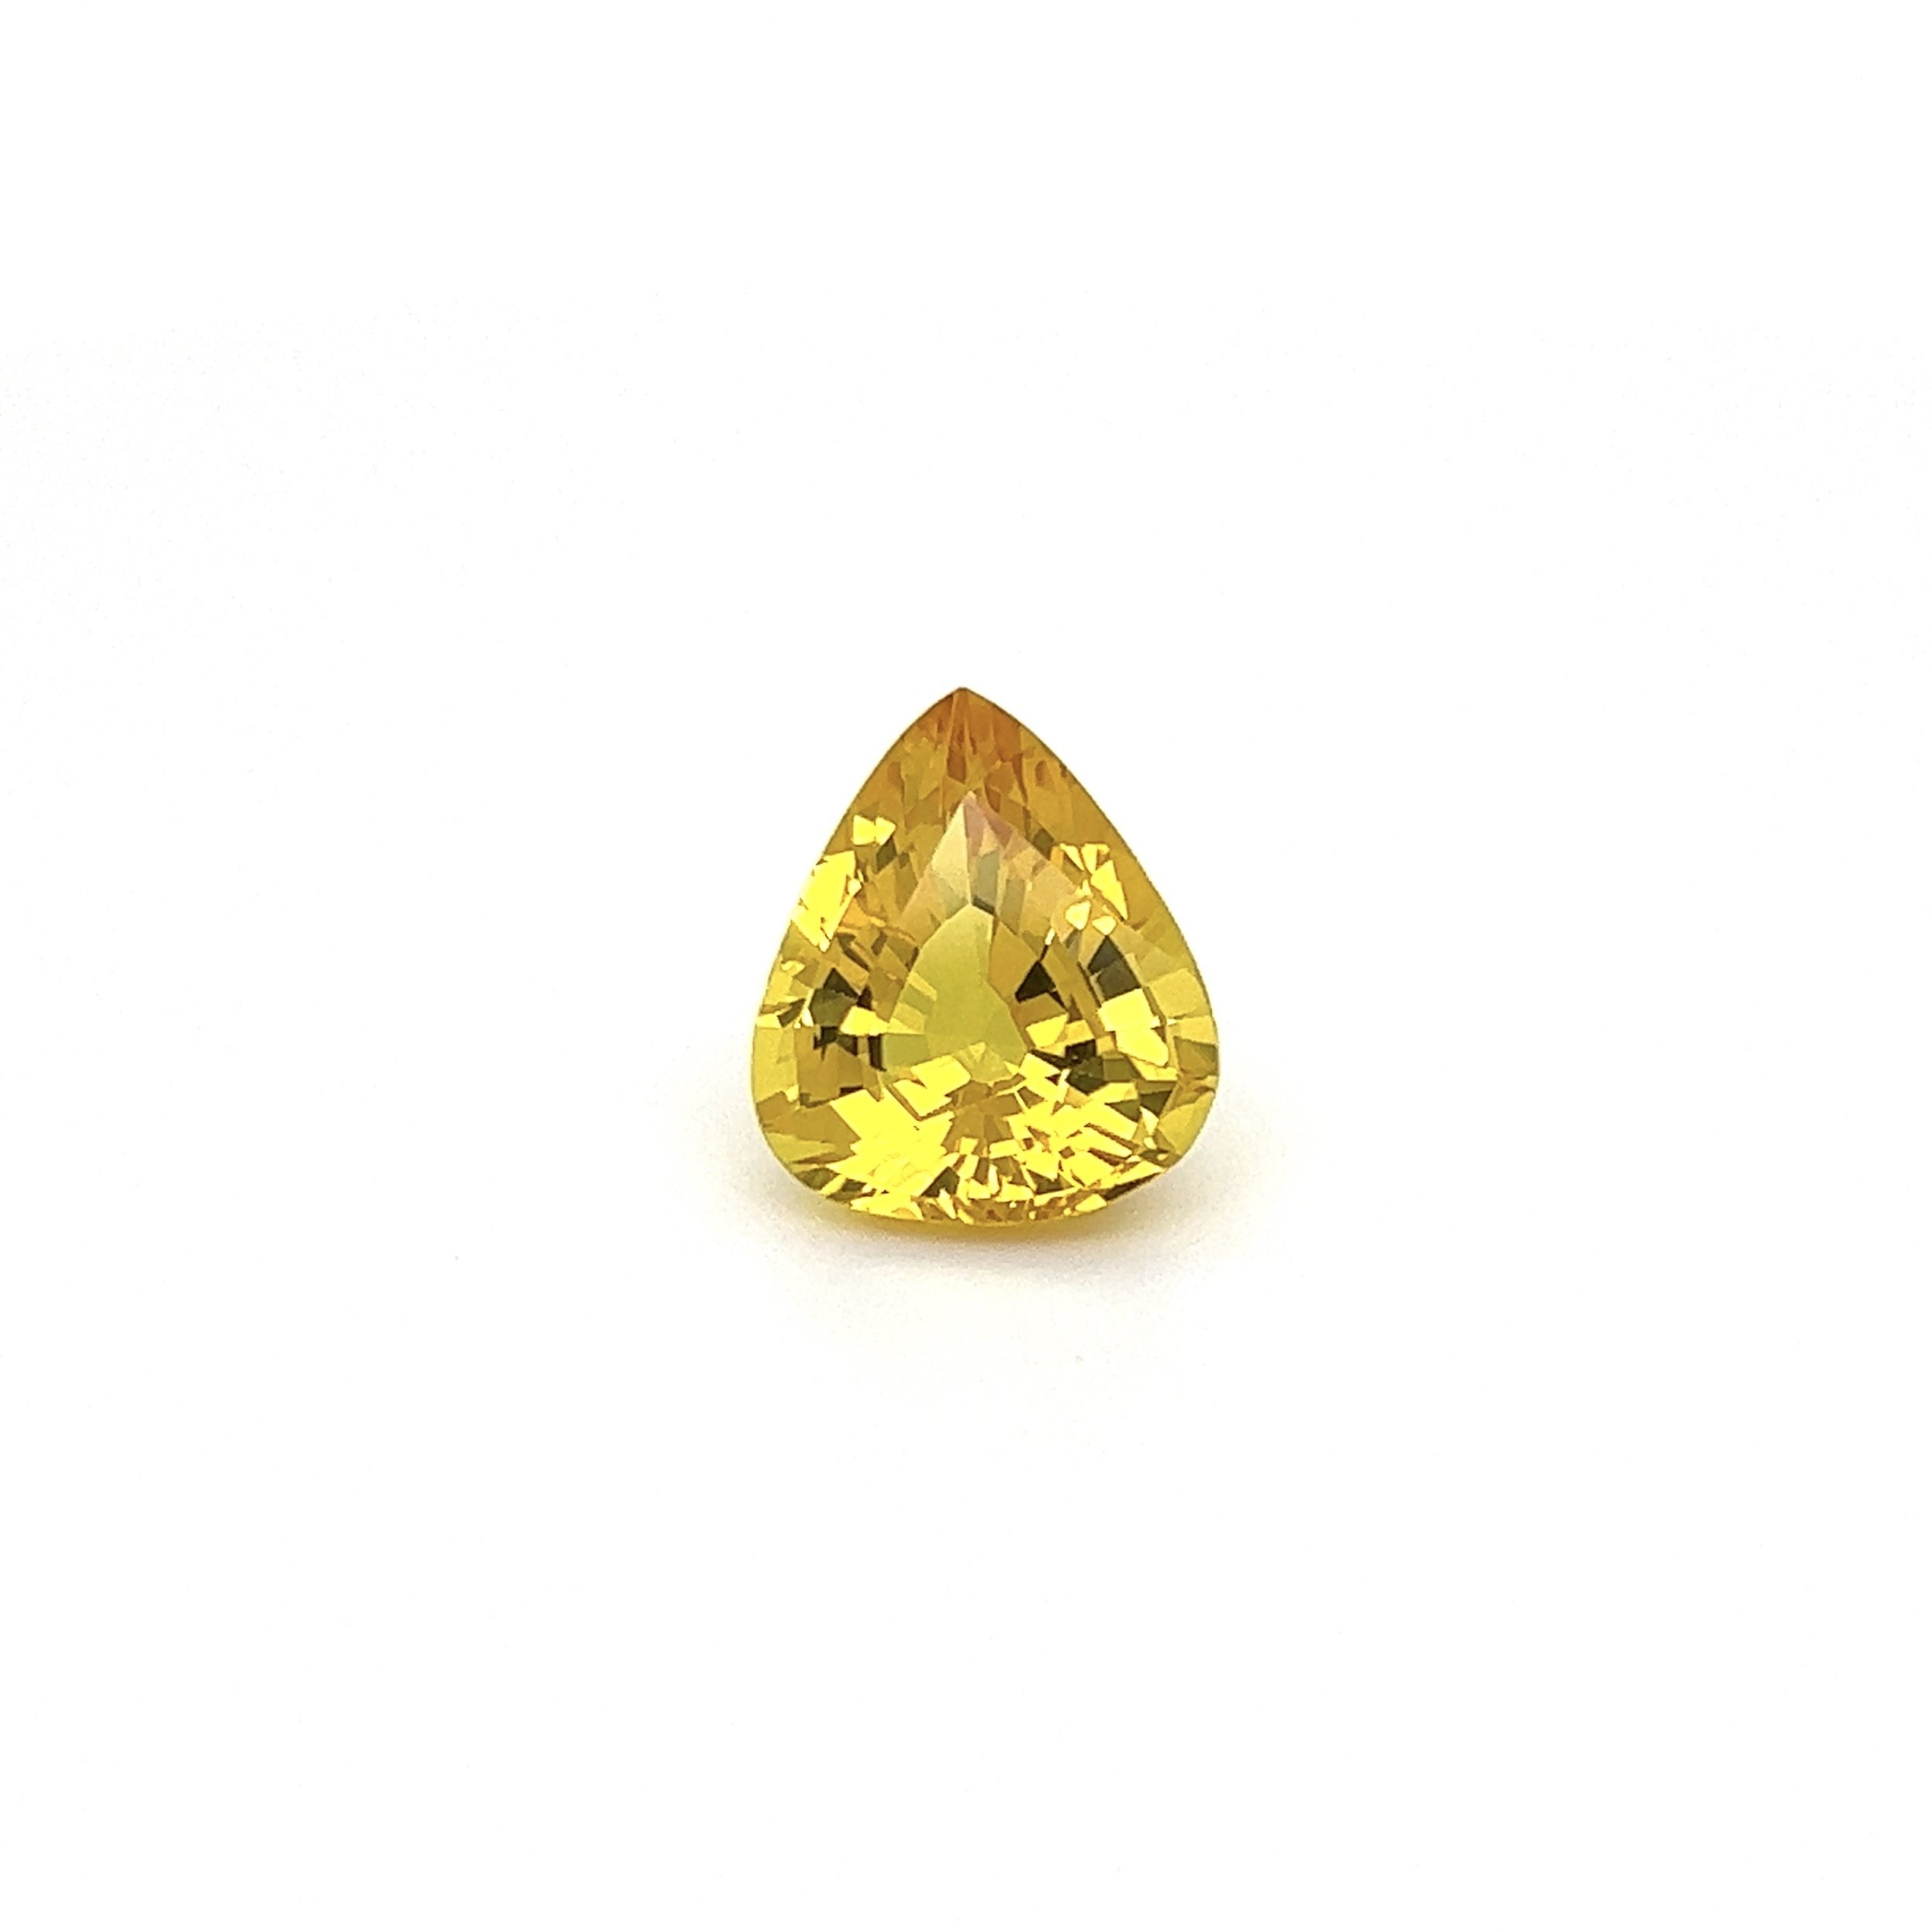 7.41ct Pear Shape Yellow Sapphire GIA Beryllium Diffused 13.35 x 11.42 x 6.98mm